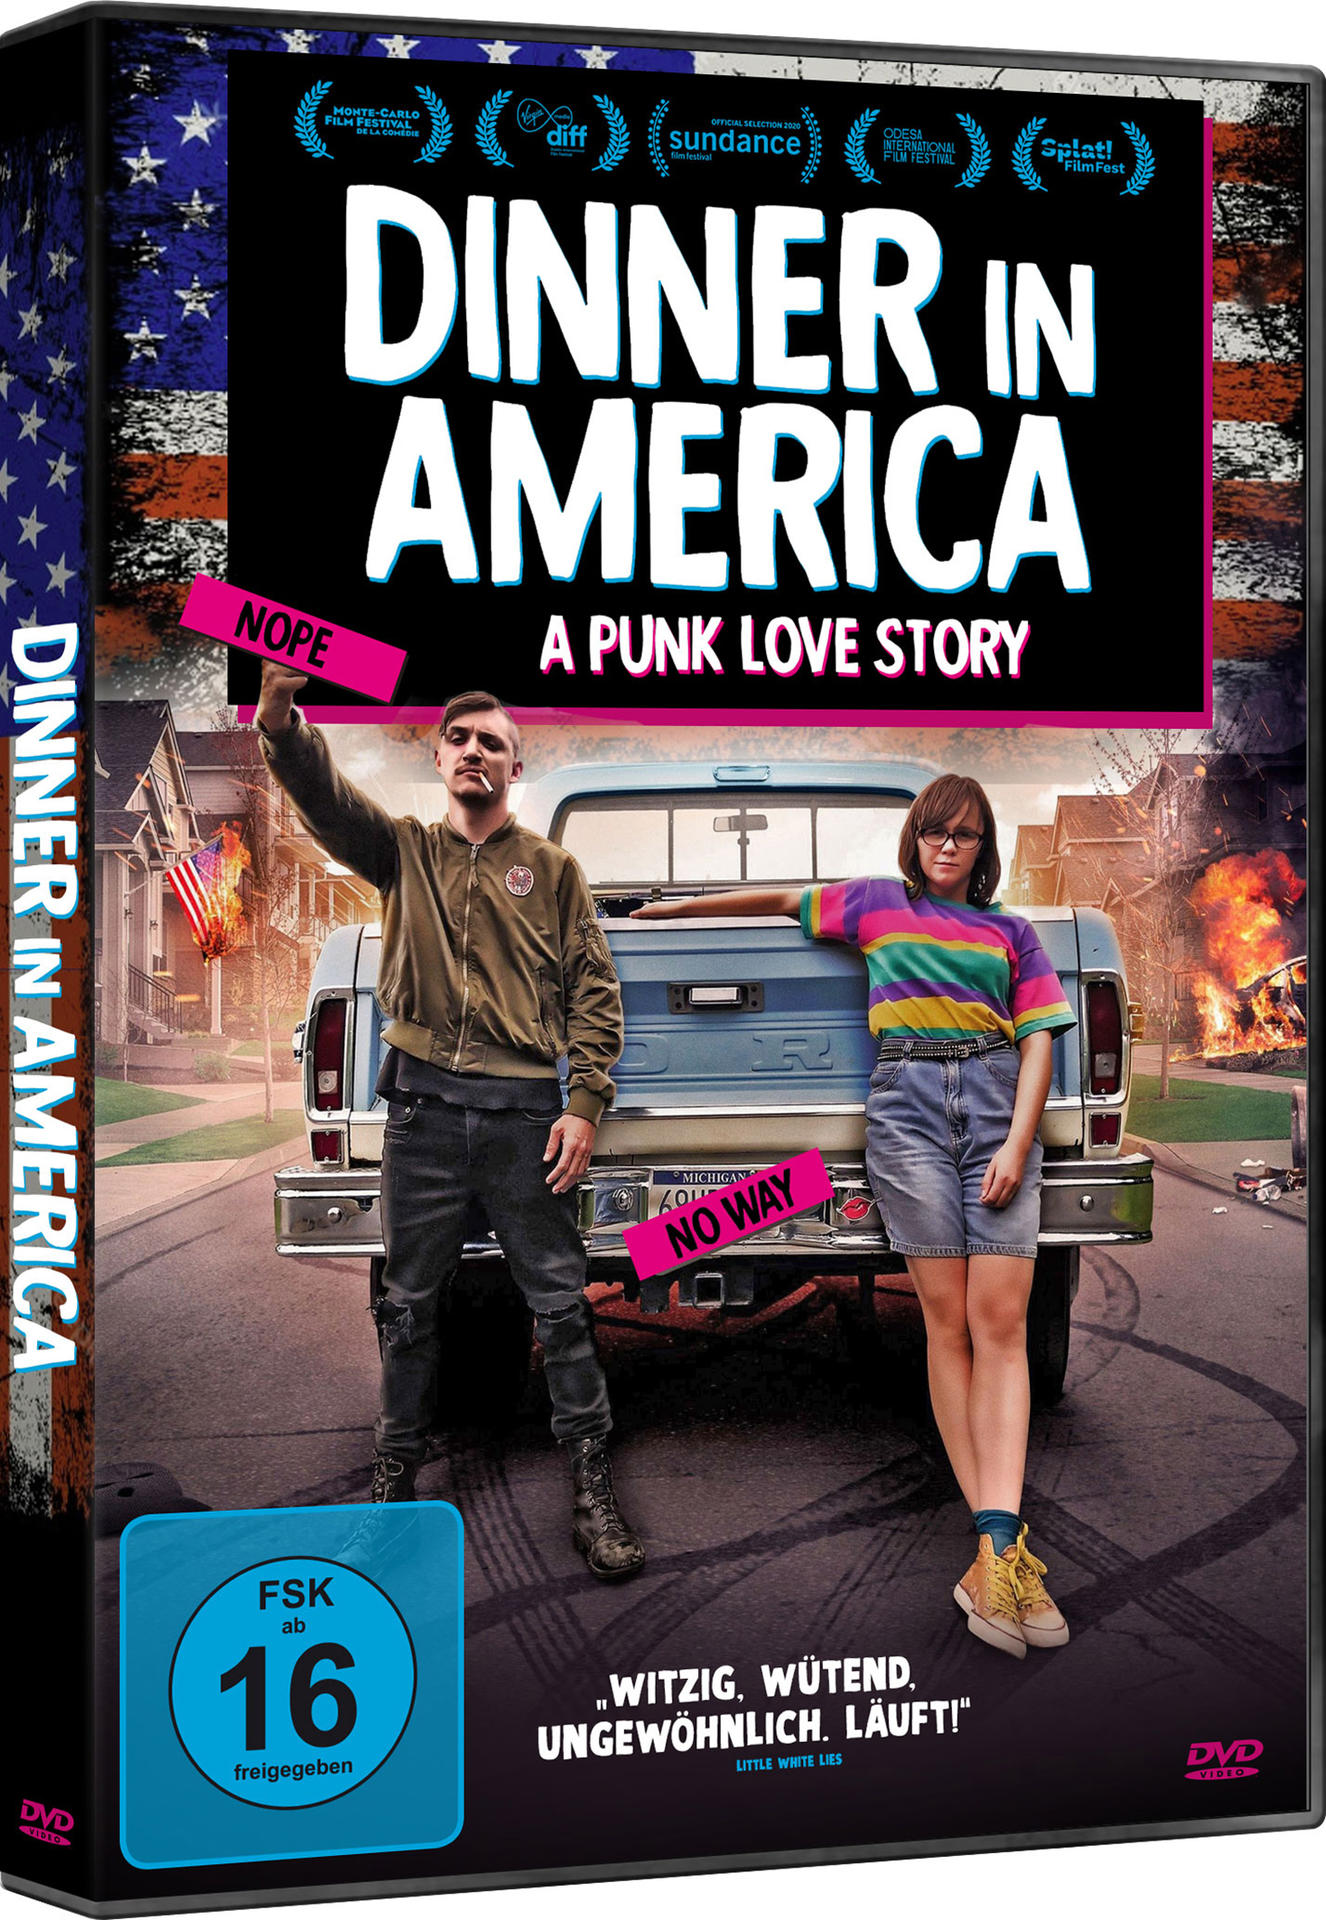 America Story - DVD Love in Punk A Dinner